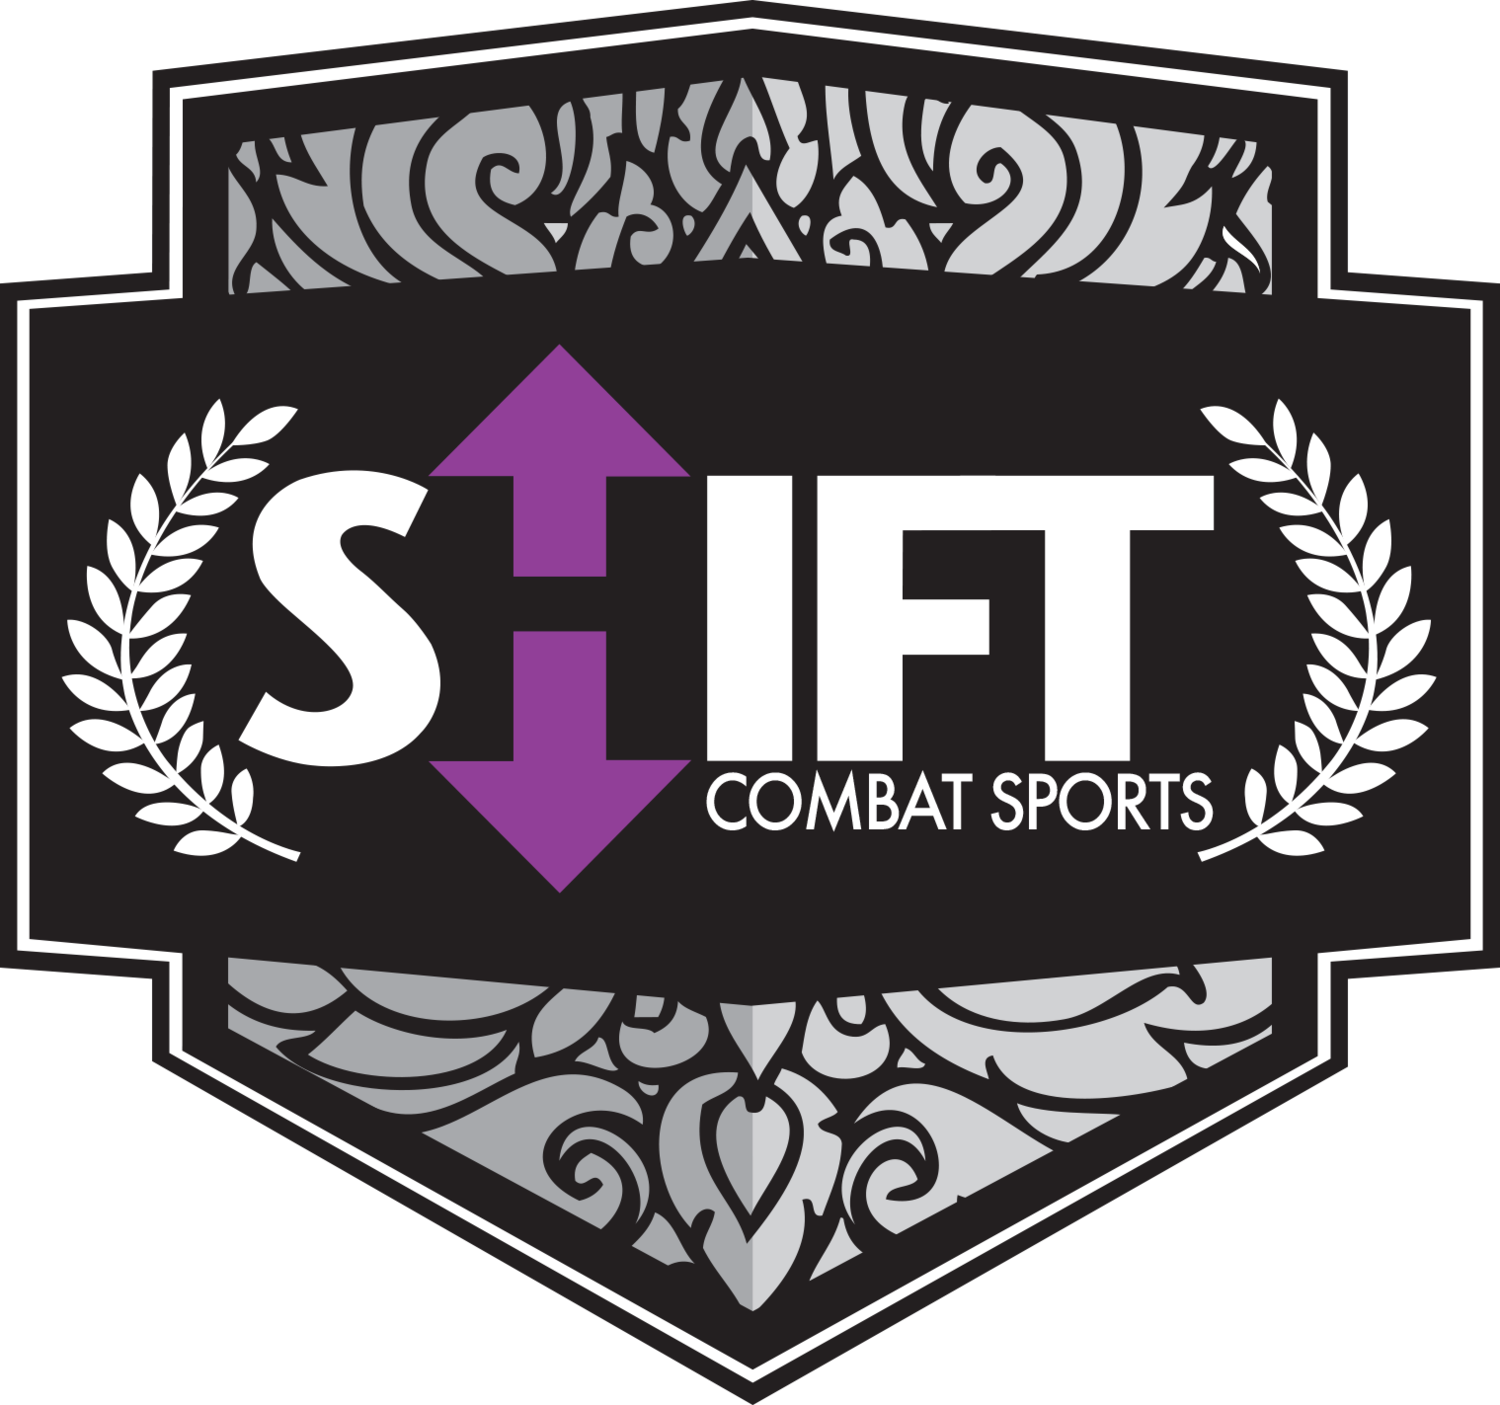 SHIFT Combat Sports